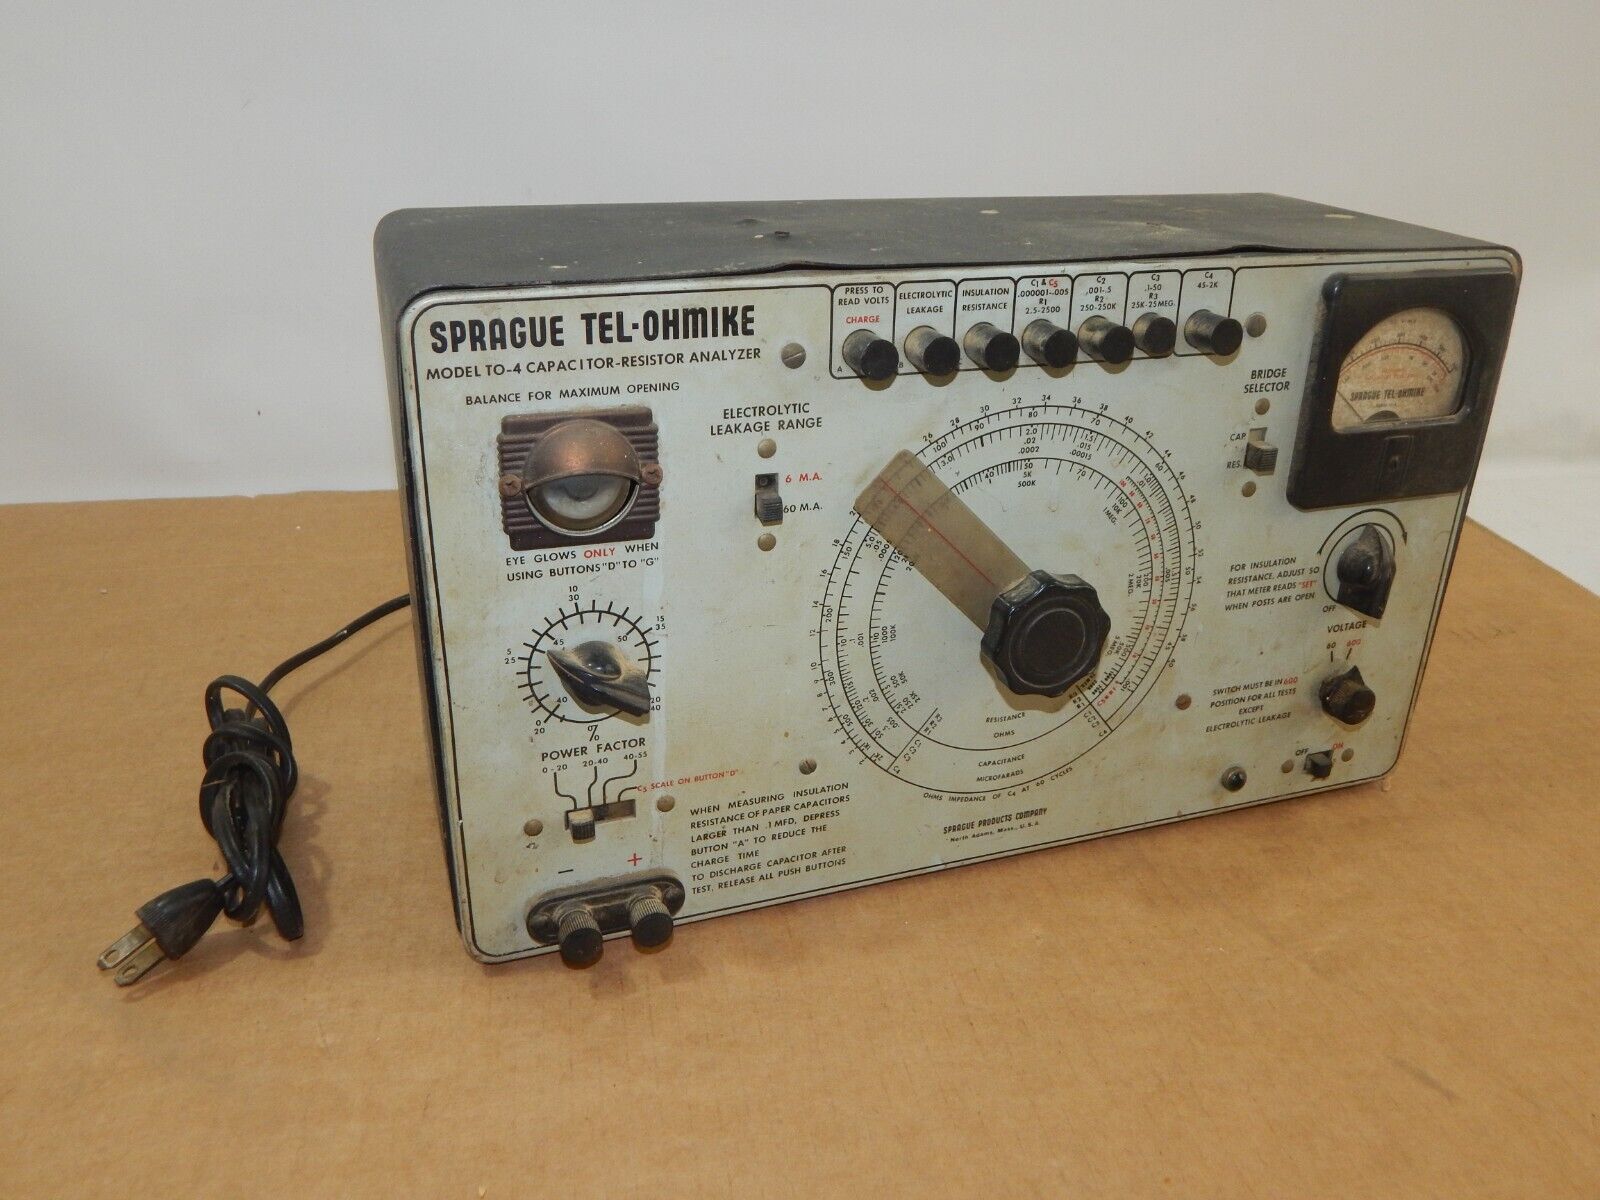 Vintage Sprague Tel-Ohmike Model TO-4 Capacitor Resistor Analyzer Made in USA